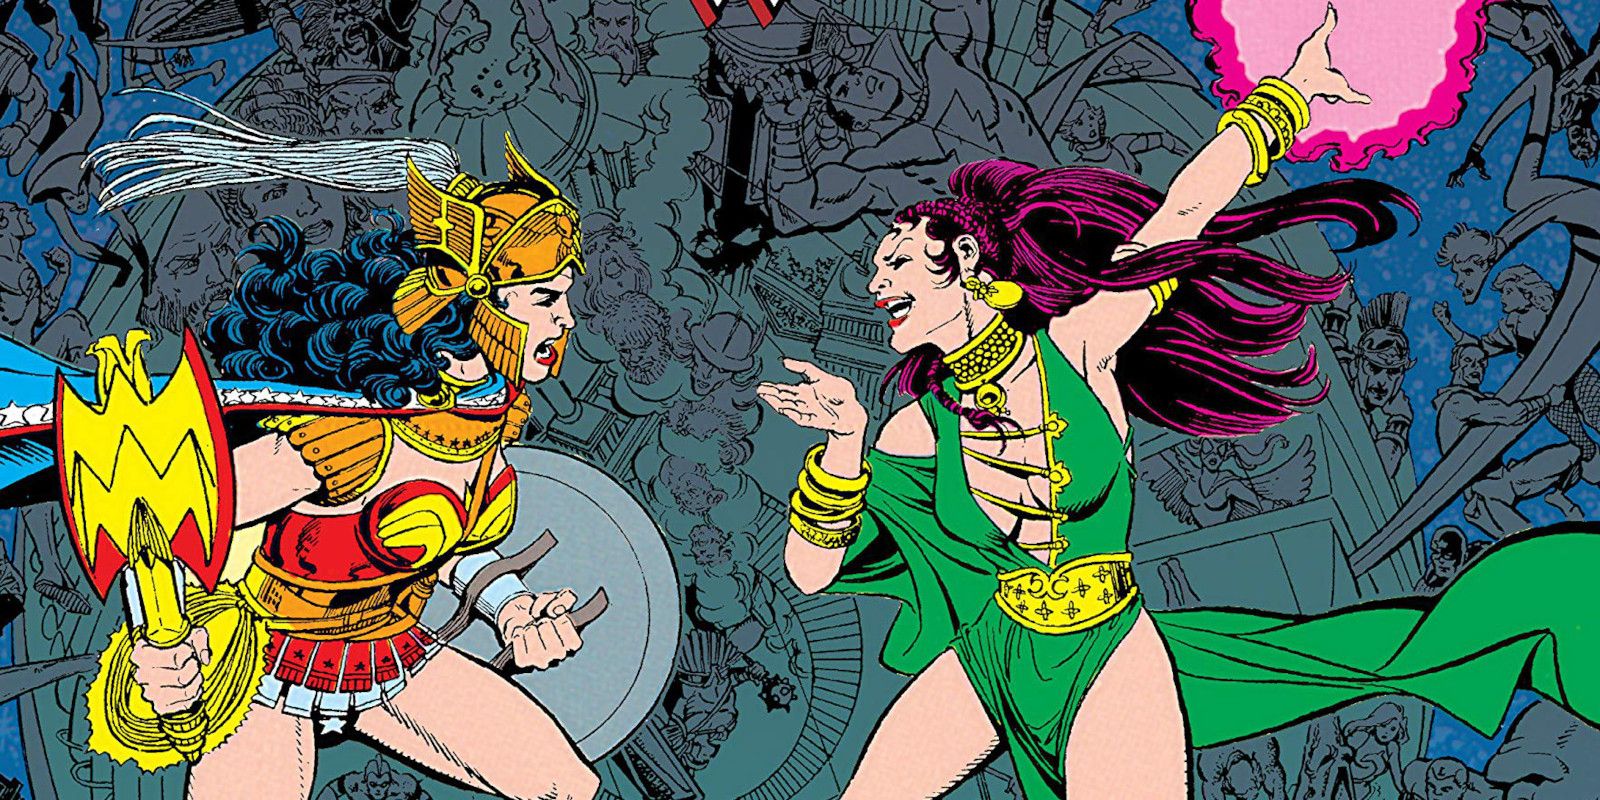 Wonder Woman and Circe battle